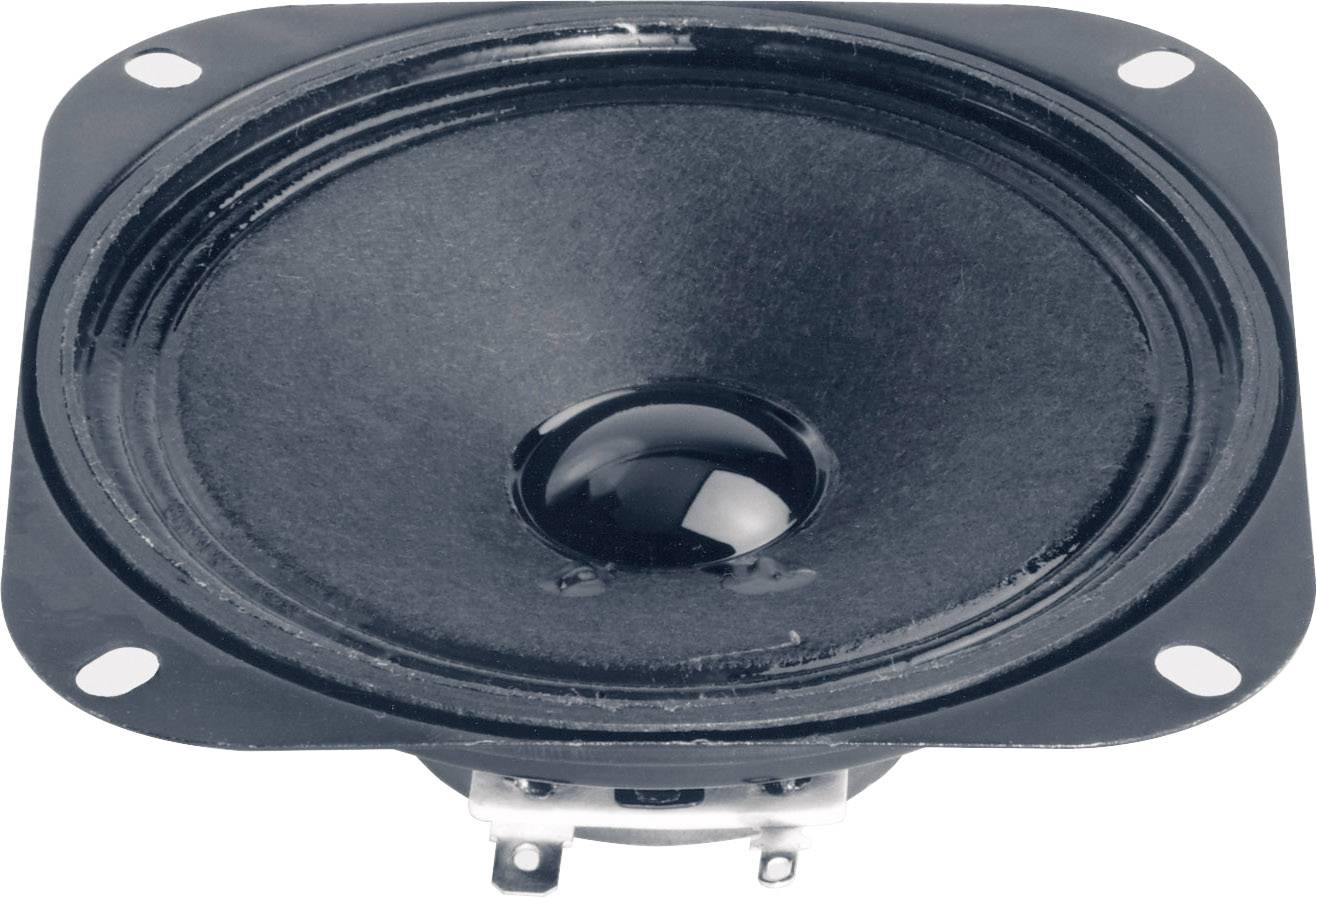 Verleiding spiraal Martin Luther King Junior Visaton R 10 S TE 4 inch 10 cm Wideband speaker 20 W 4 Ω | Conrad.com